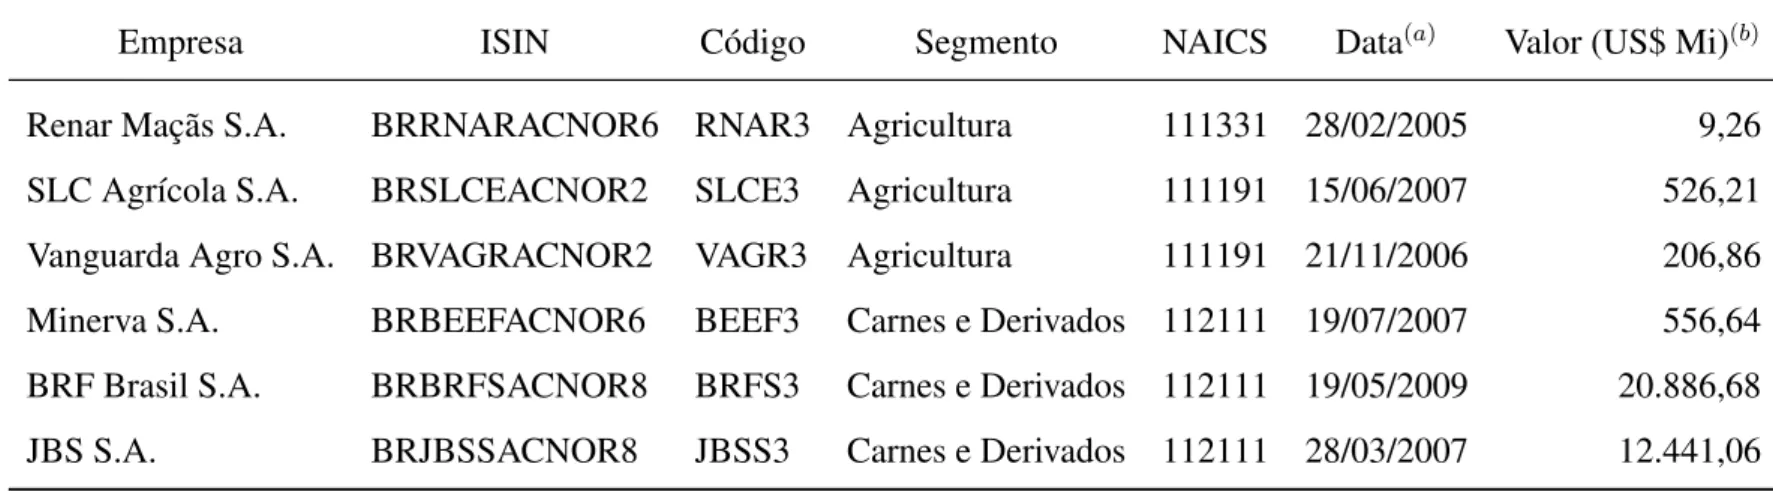 Tabela 2.2: Empresas Analisadas da Indústria Brasileira de Alimentos